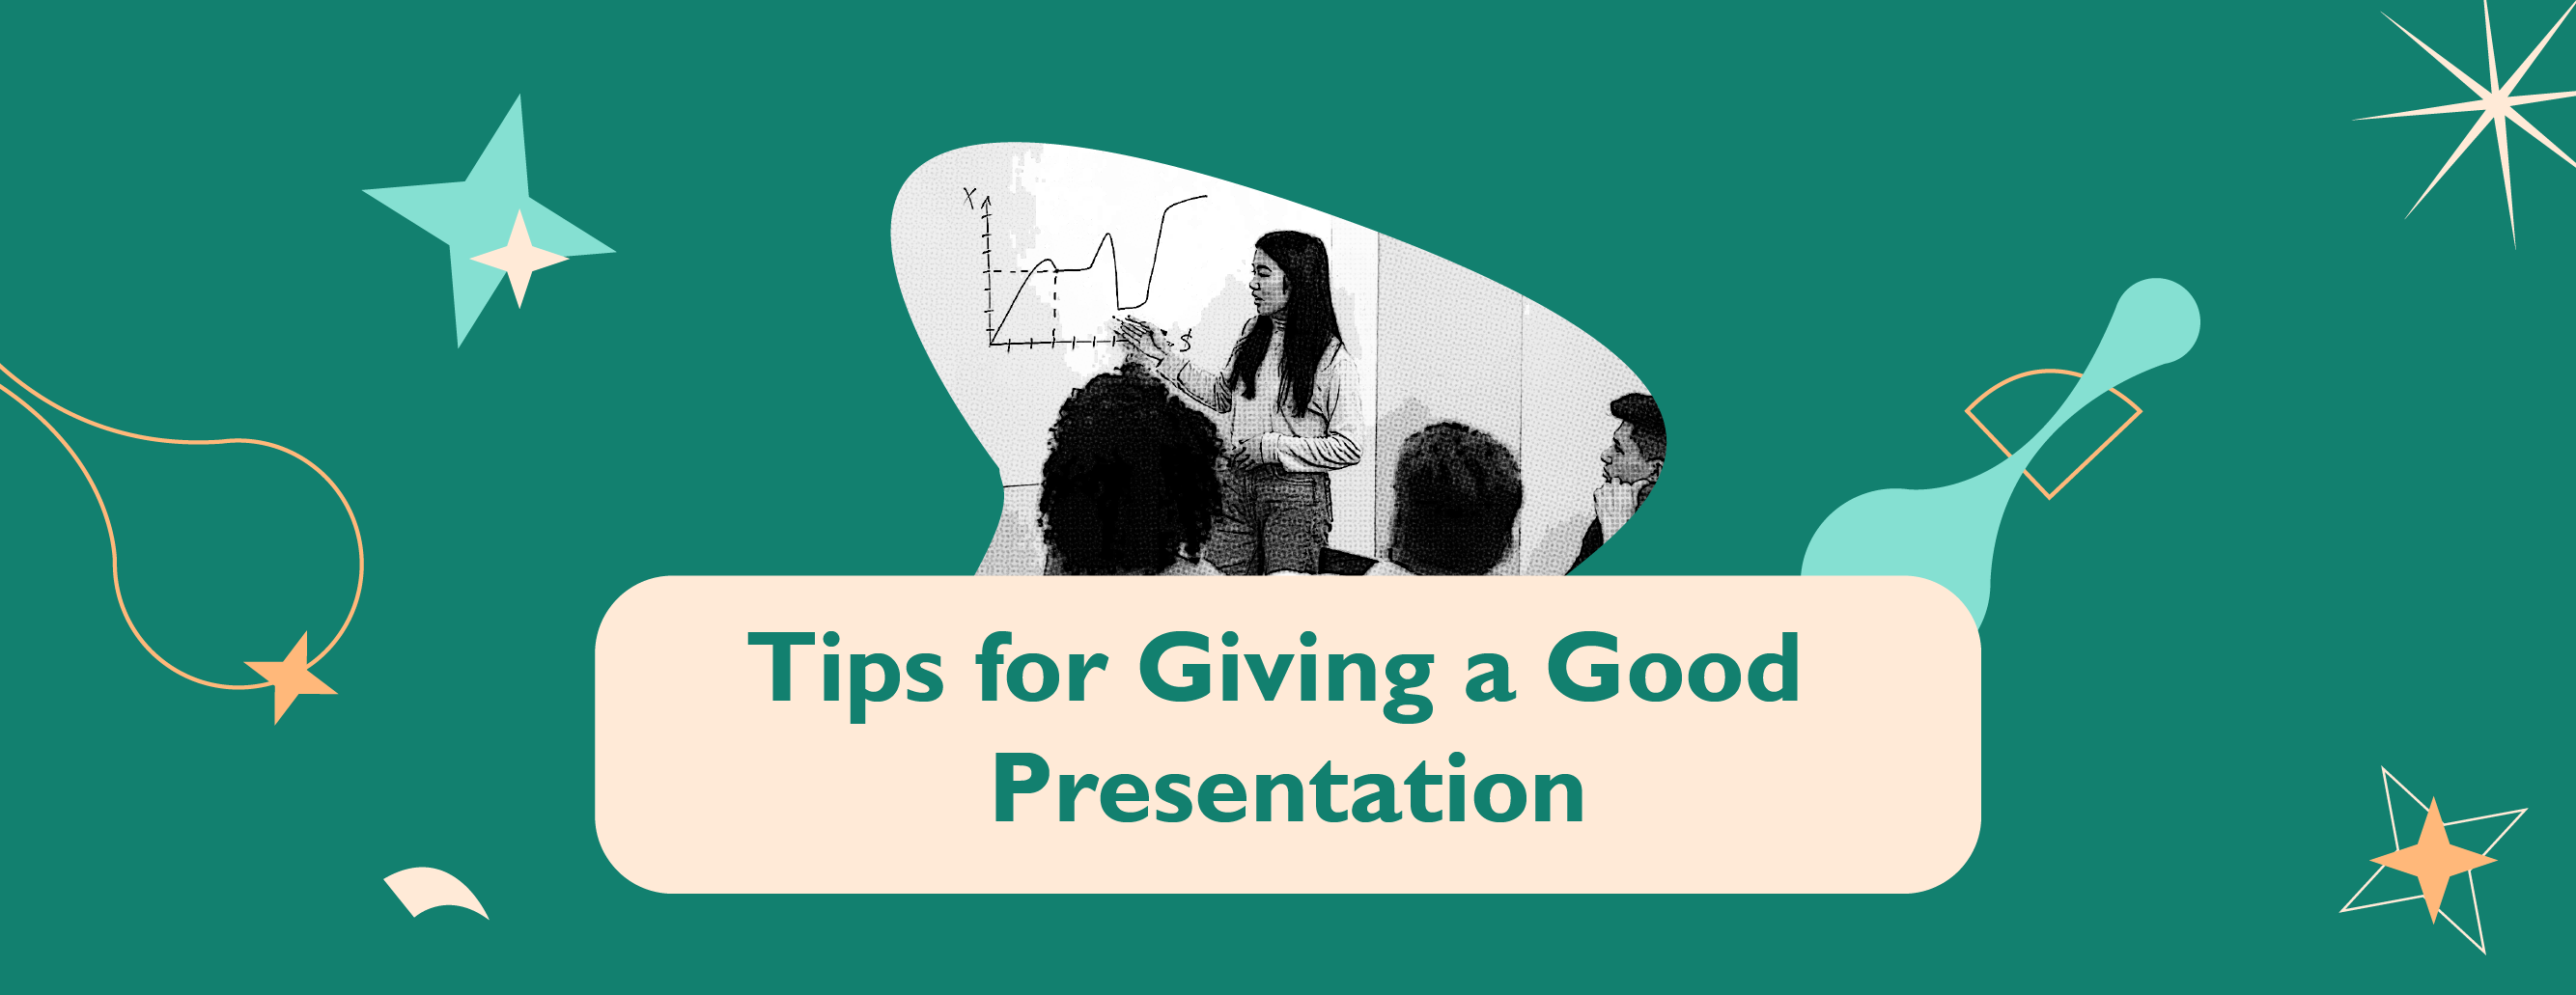 make give presentation